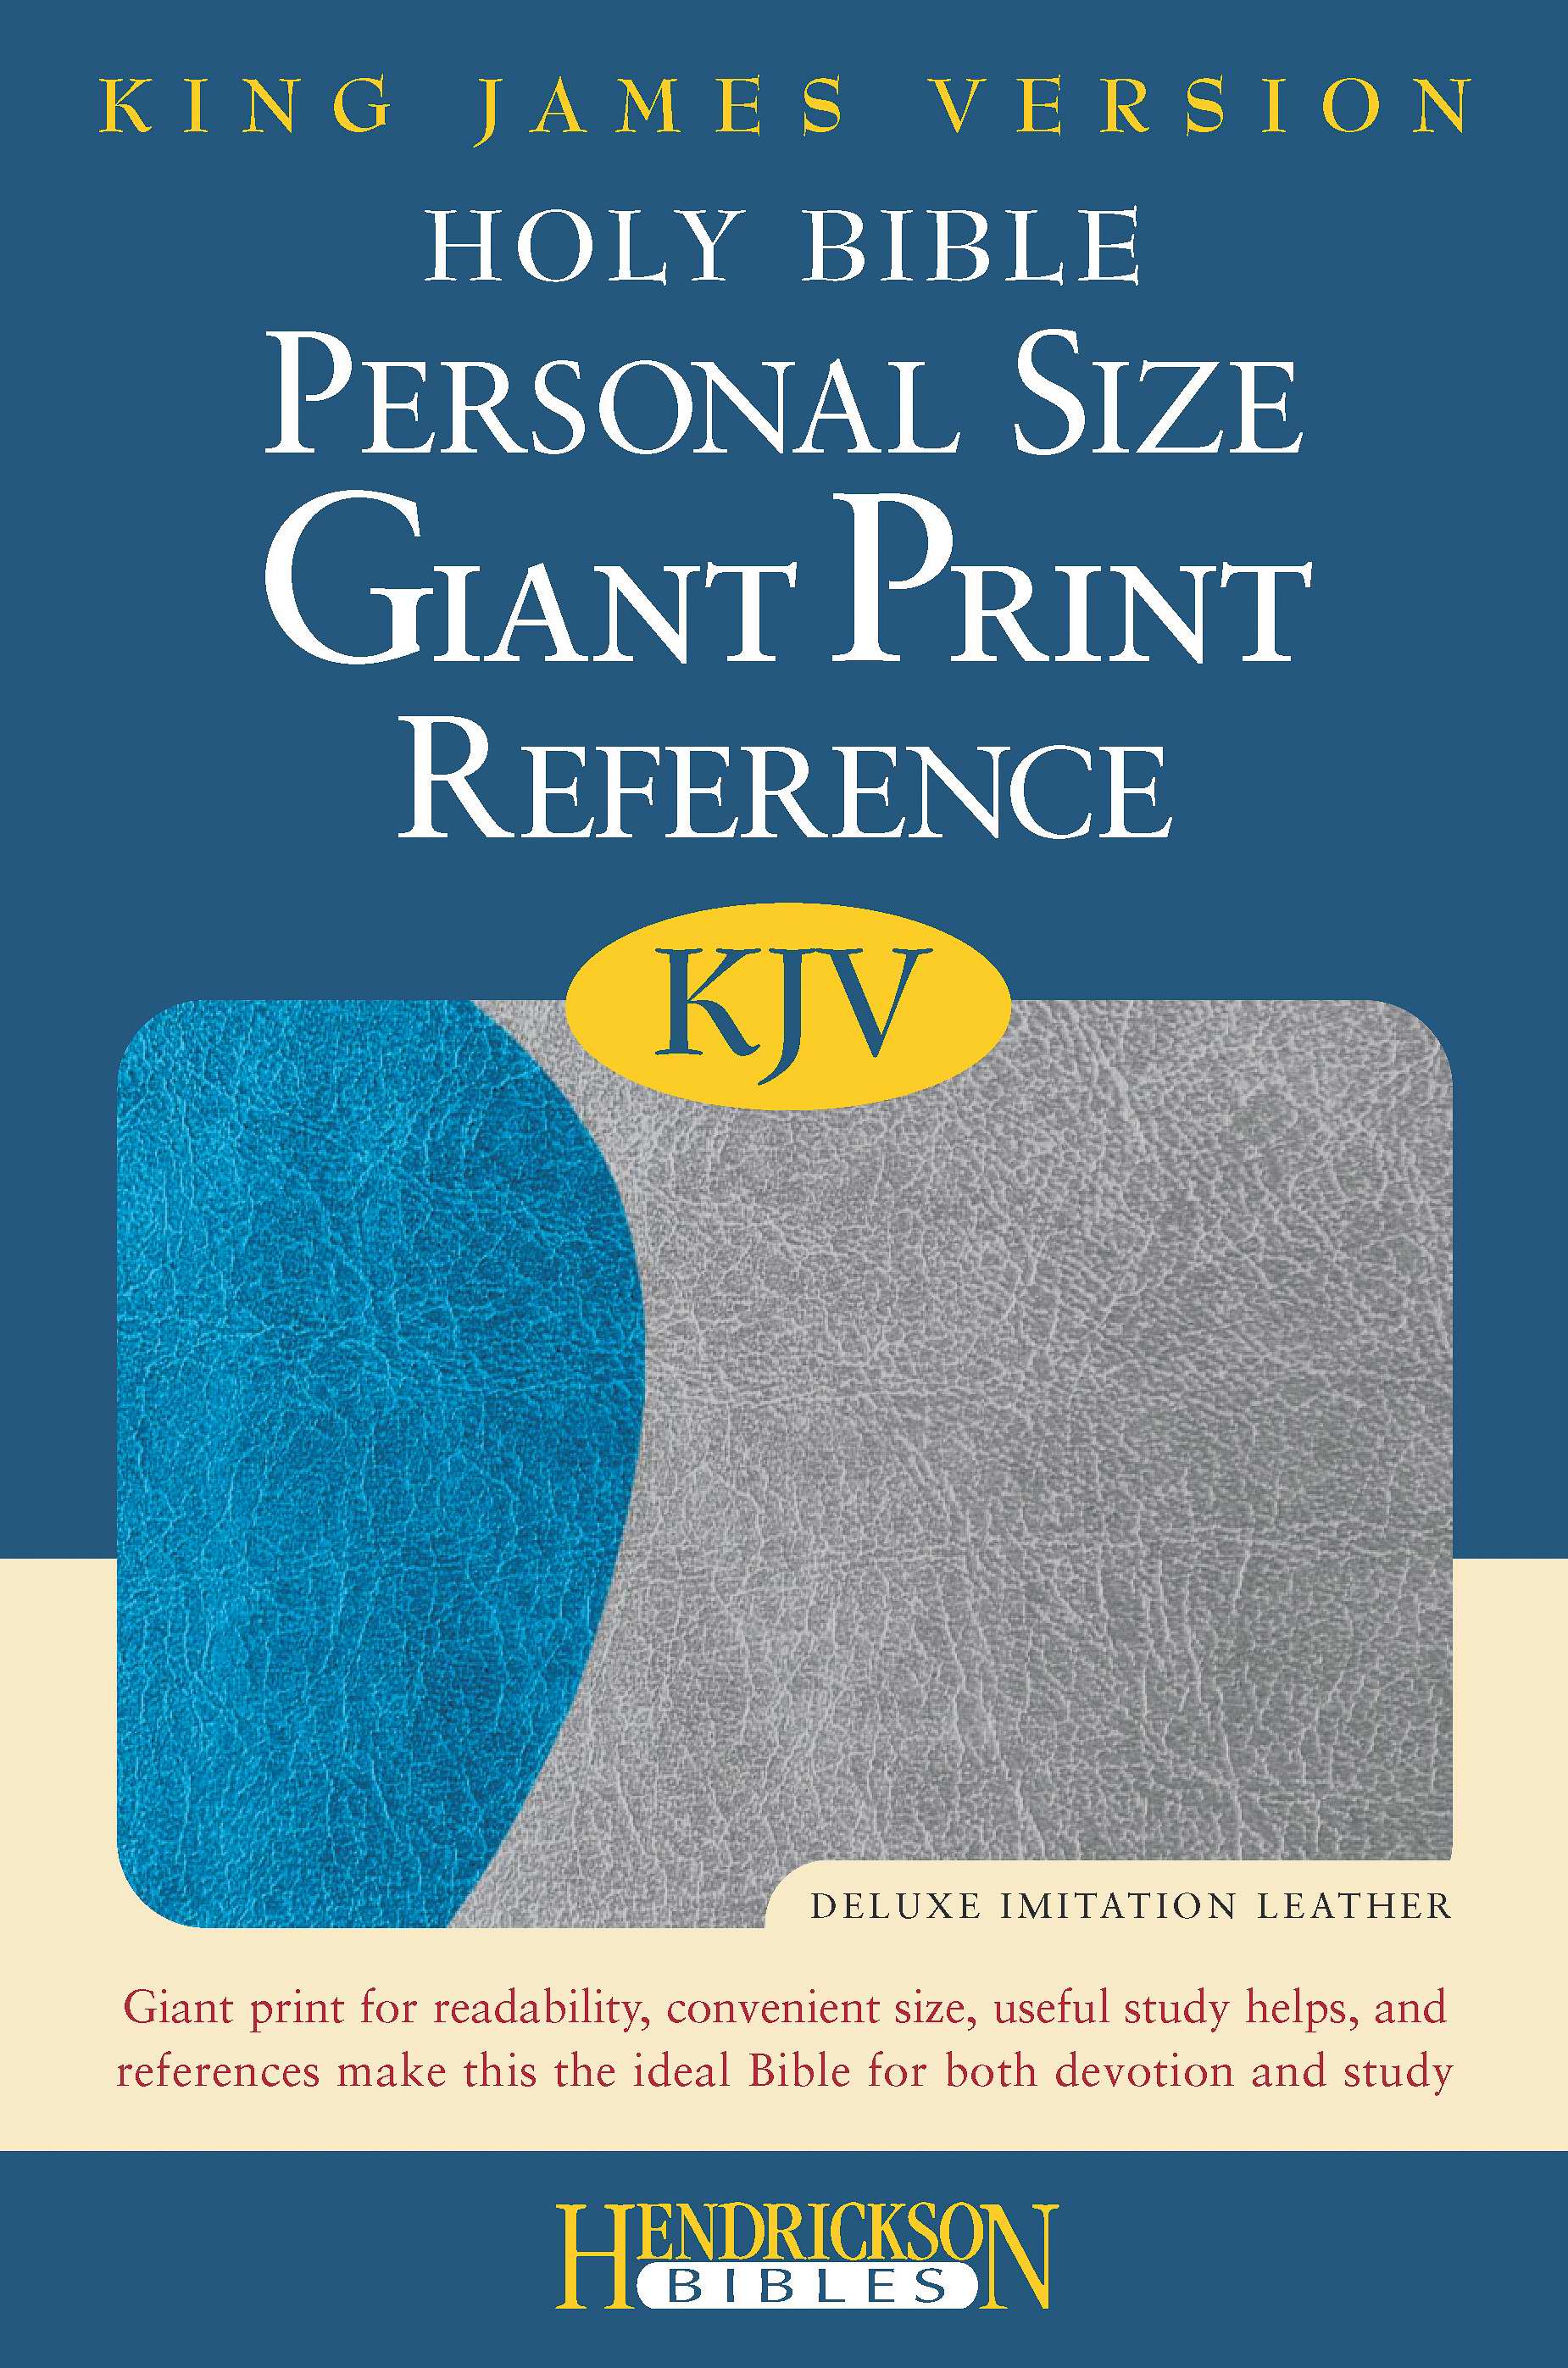 KJV Personal Size Giant Print Reference Bible Grey Imitation Leather